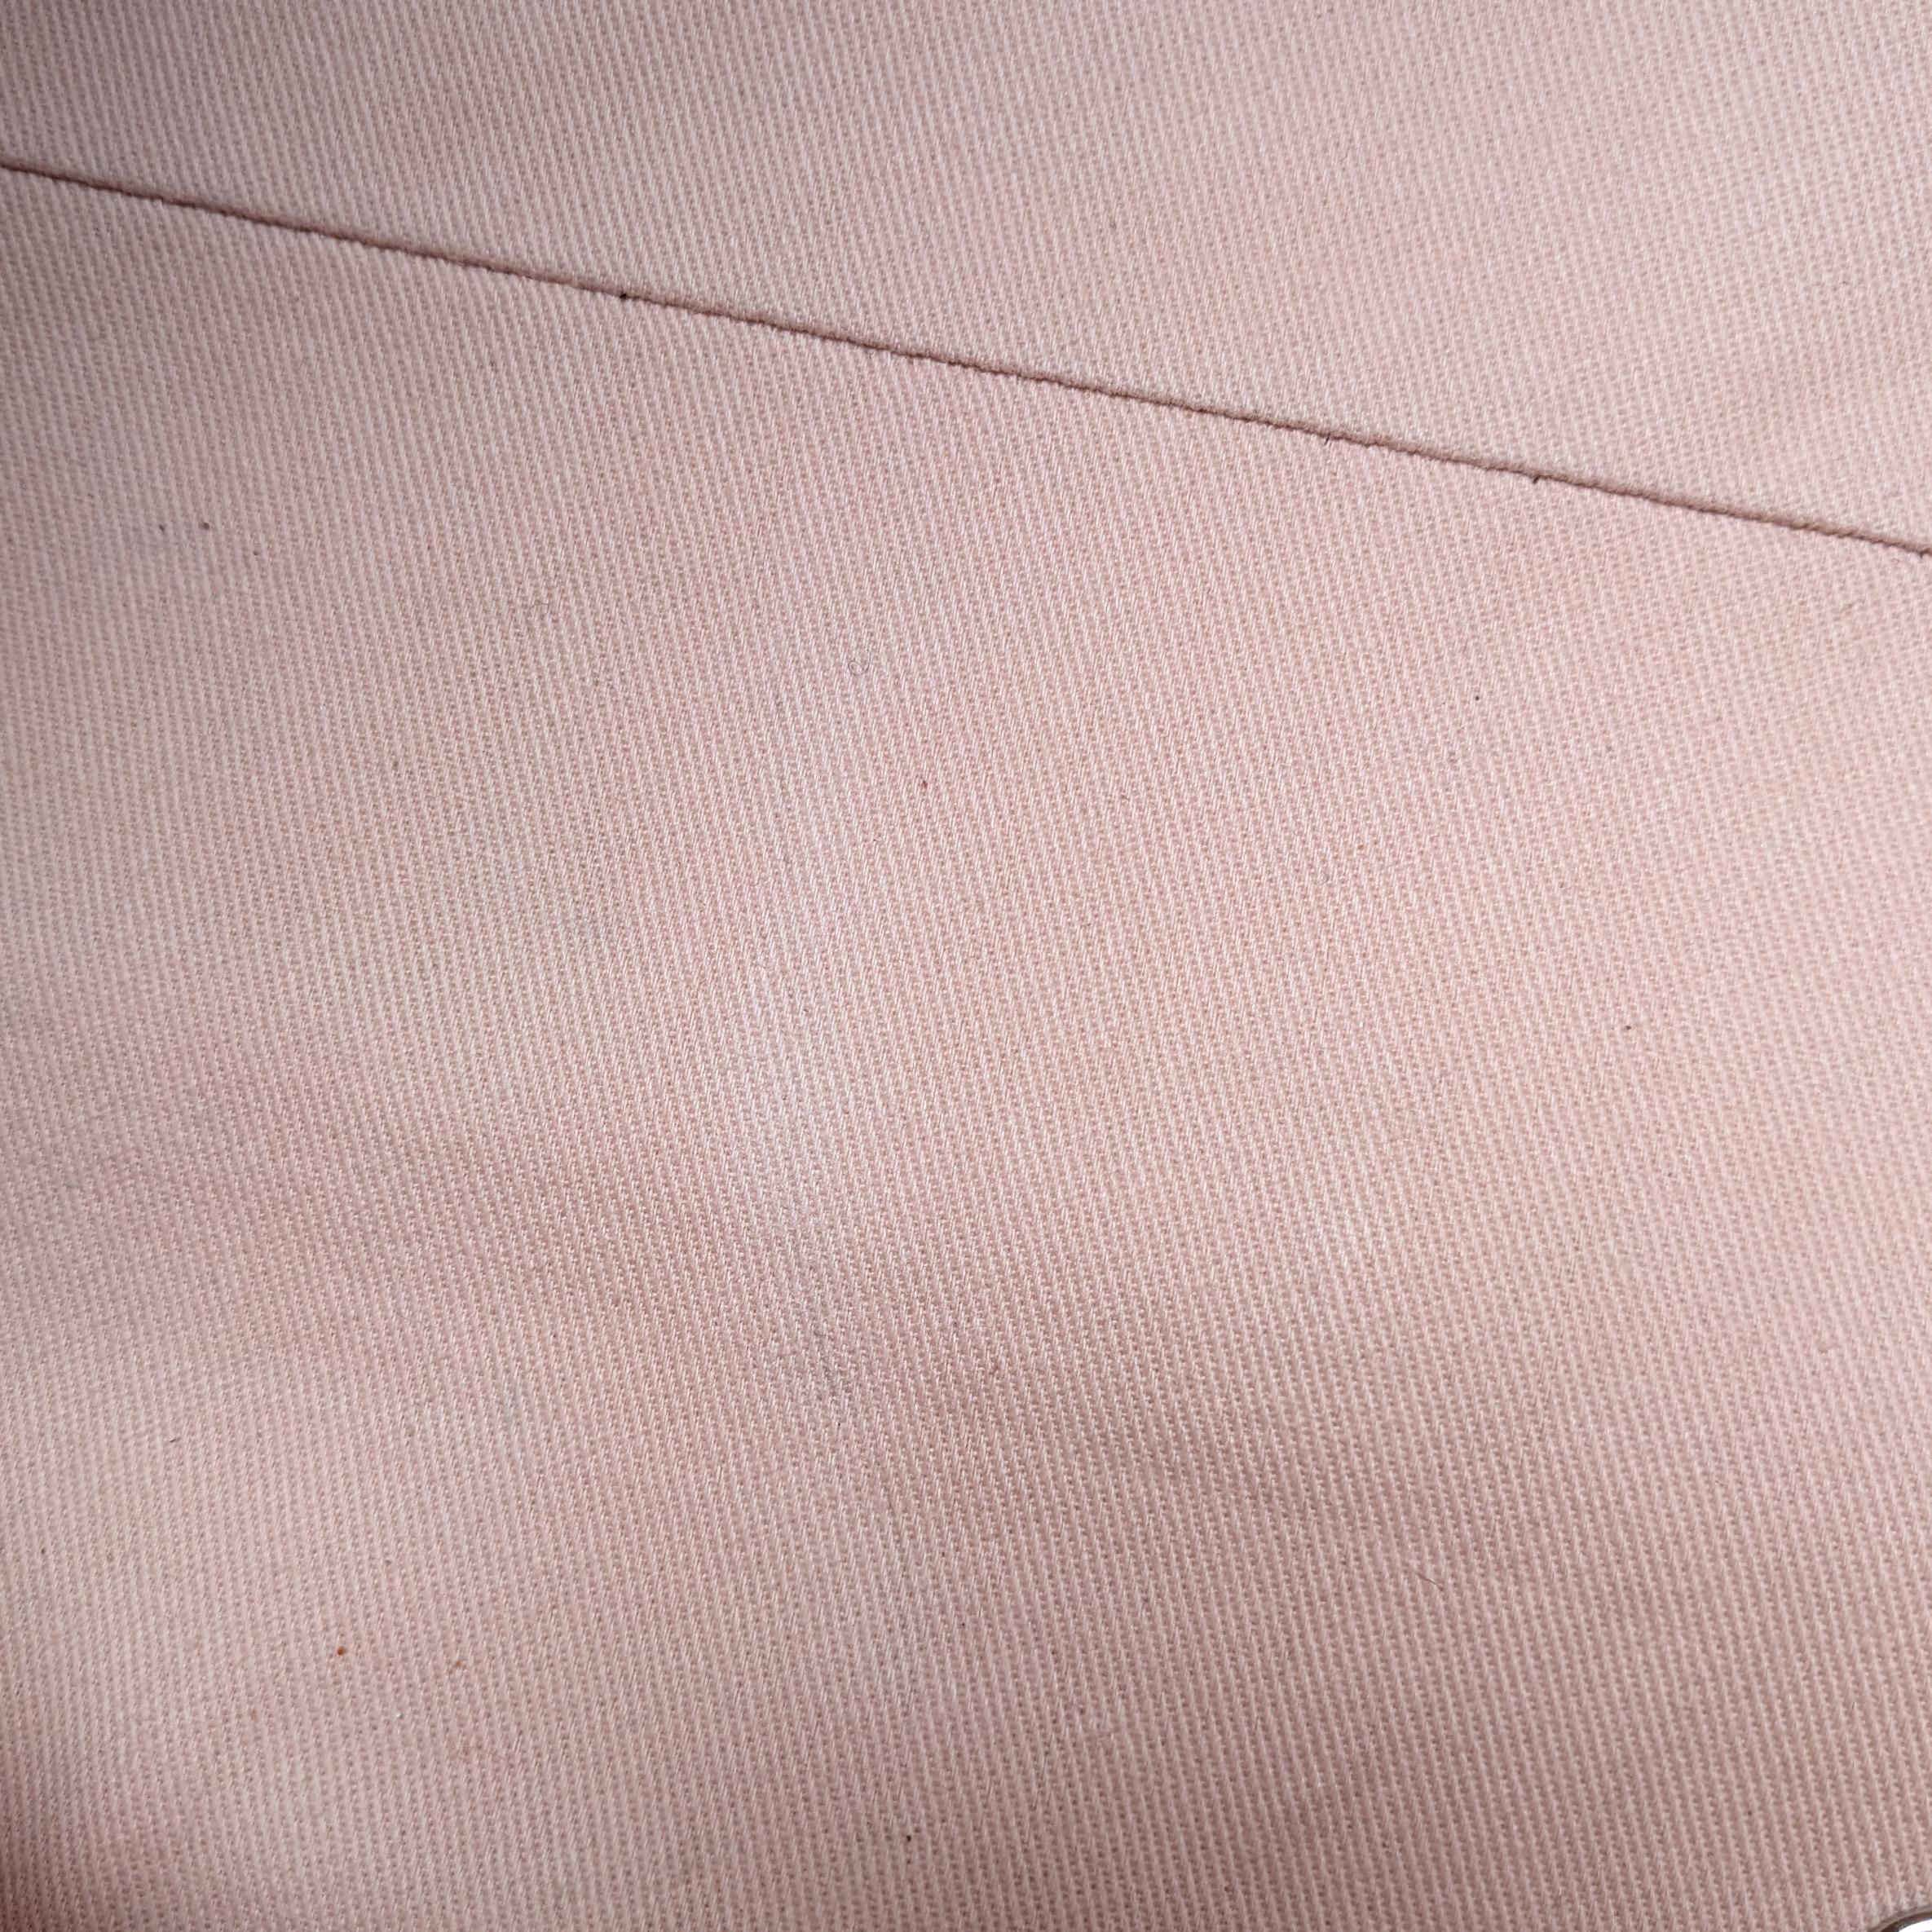 Chanel Woven Raffia Pink Medium Deauville Tote Bag 4